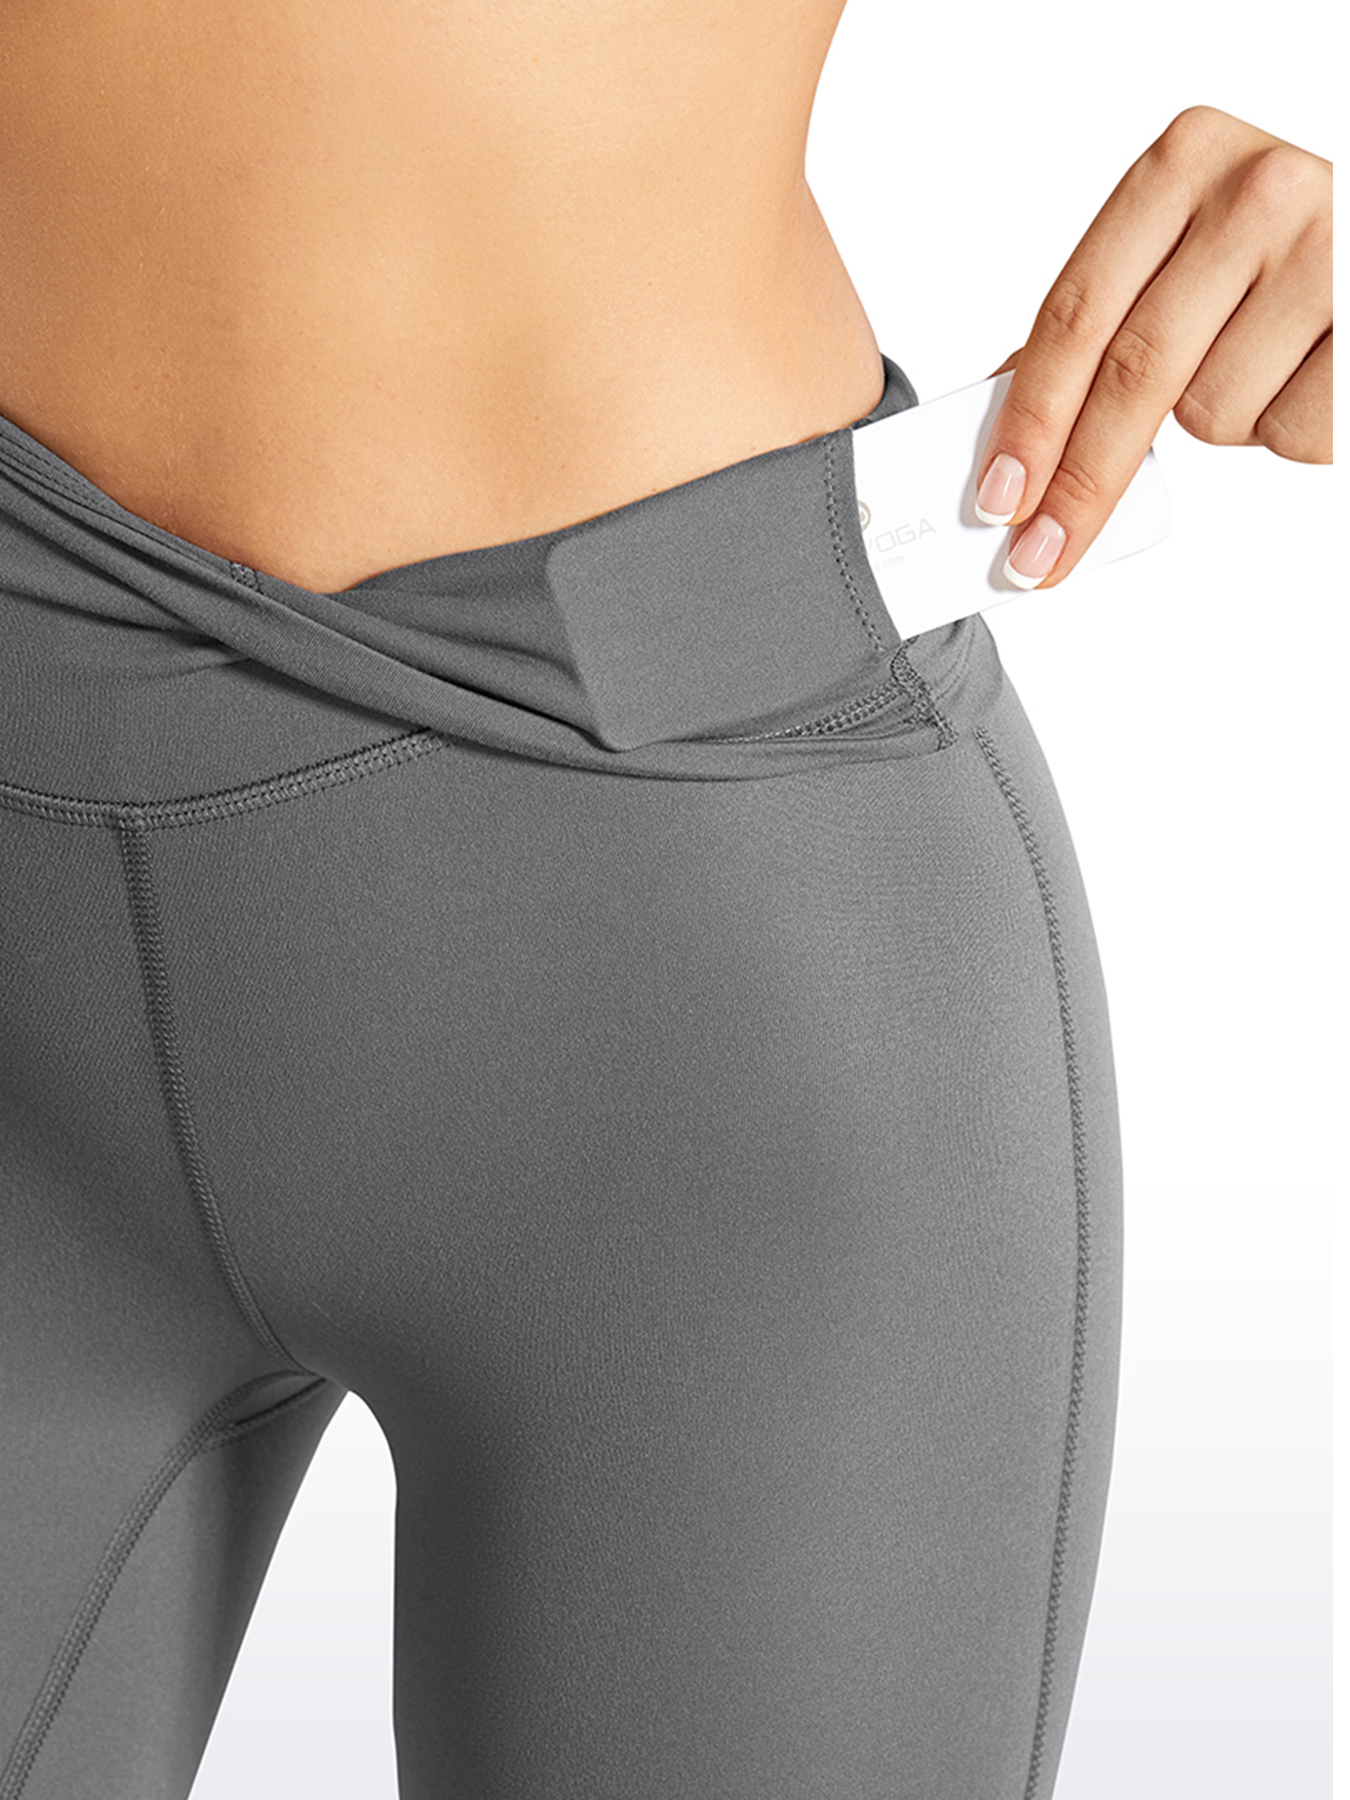 Ediodpoh Women' Yoga Pants Bright Sports Pants Thin High Waist Fitness  Pants Yoga Pants For Women Grey M 